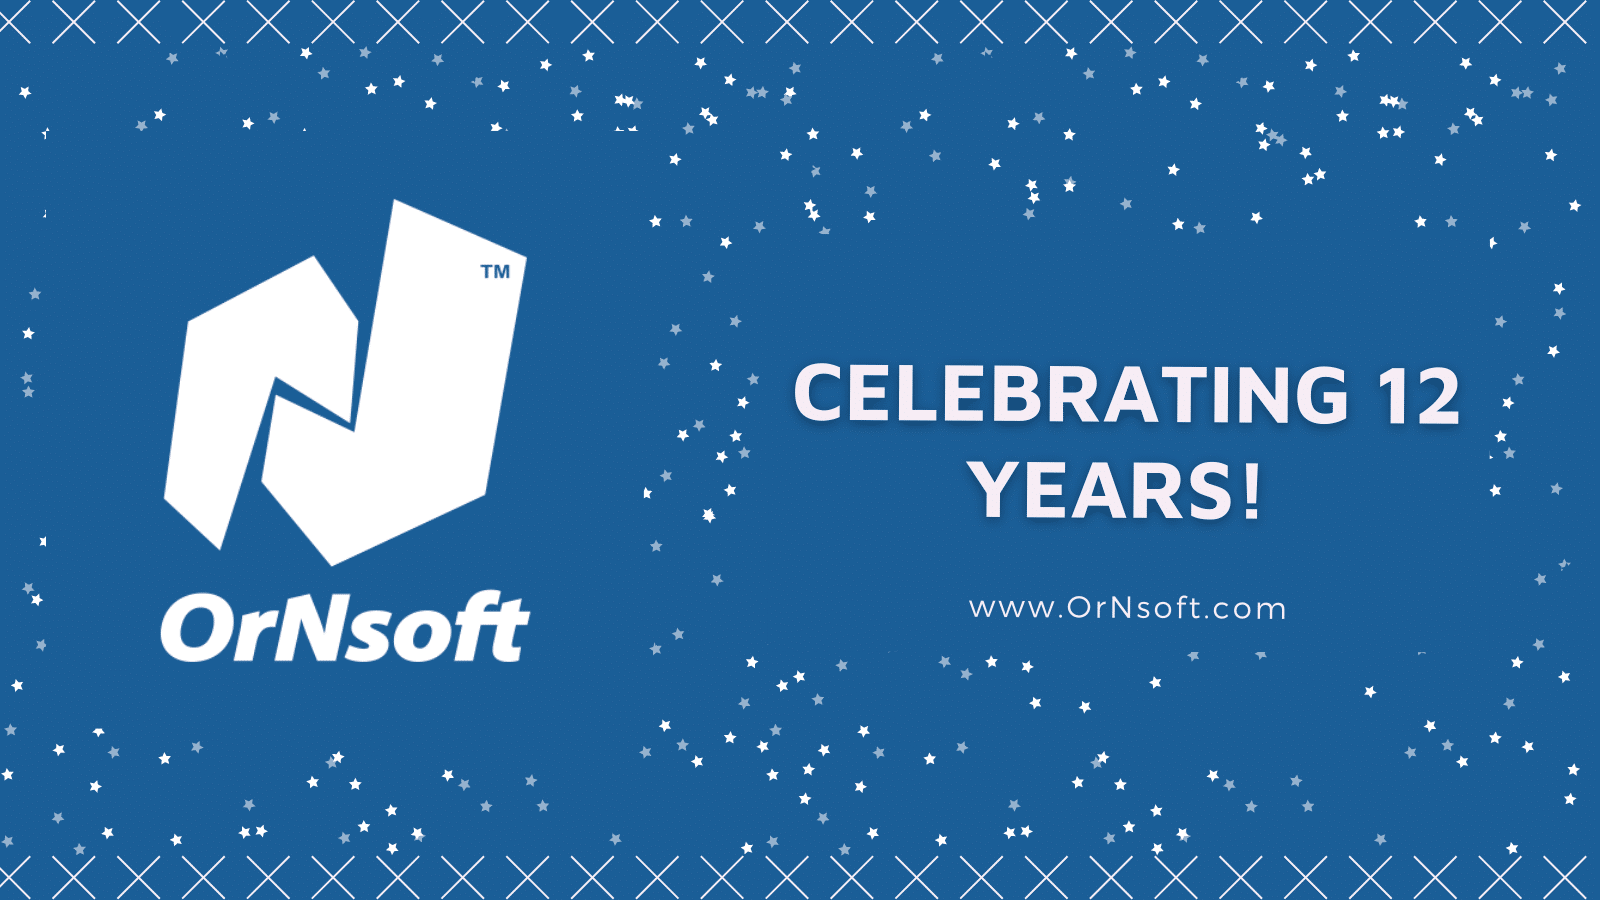 ornsoft-history-12-year-anniversary